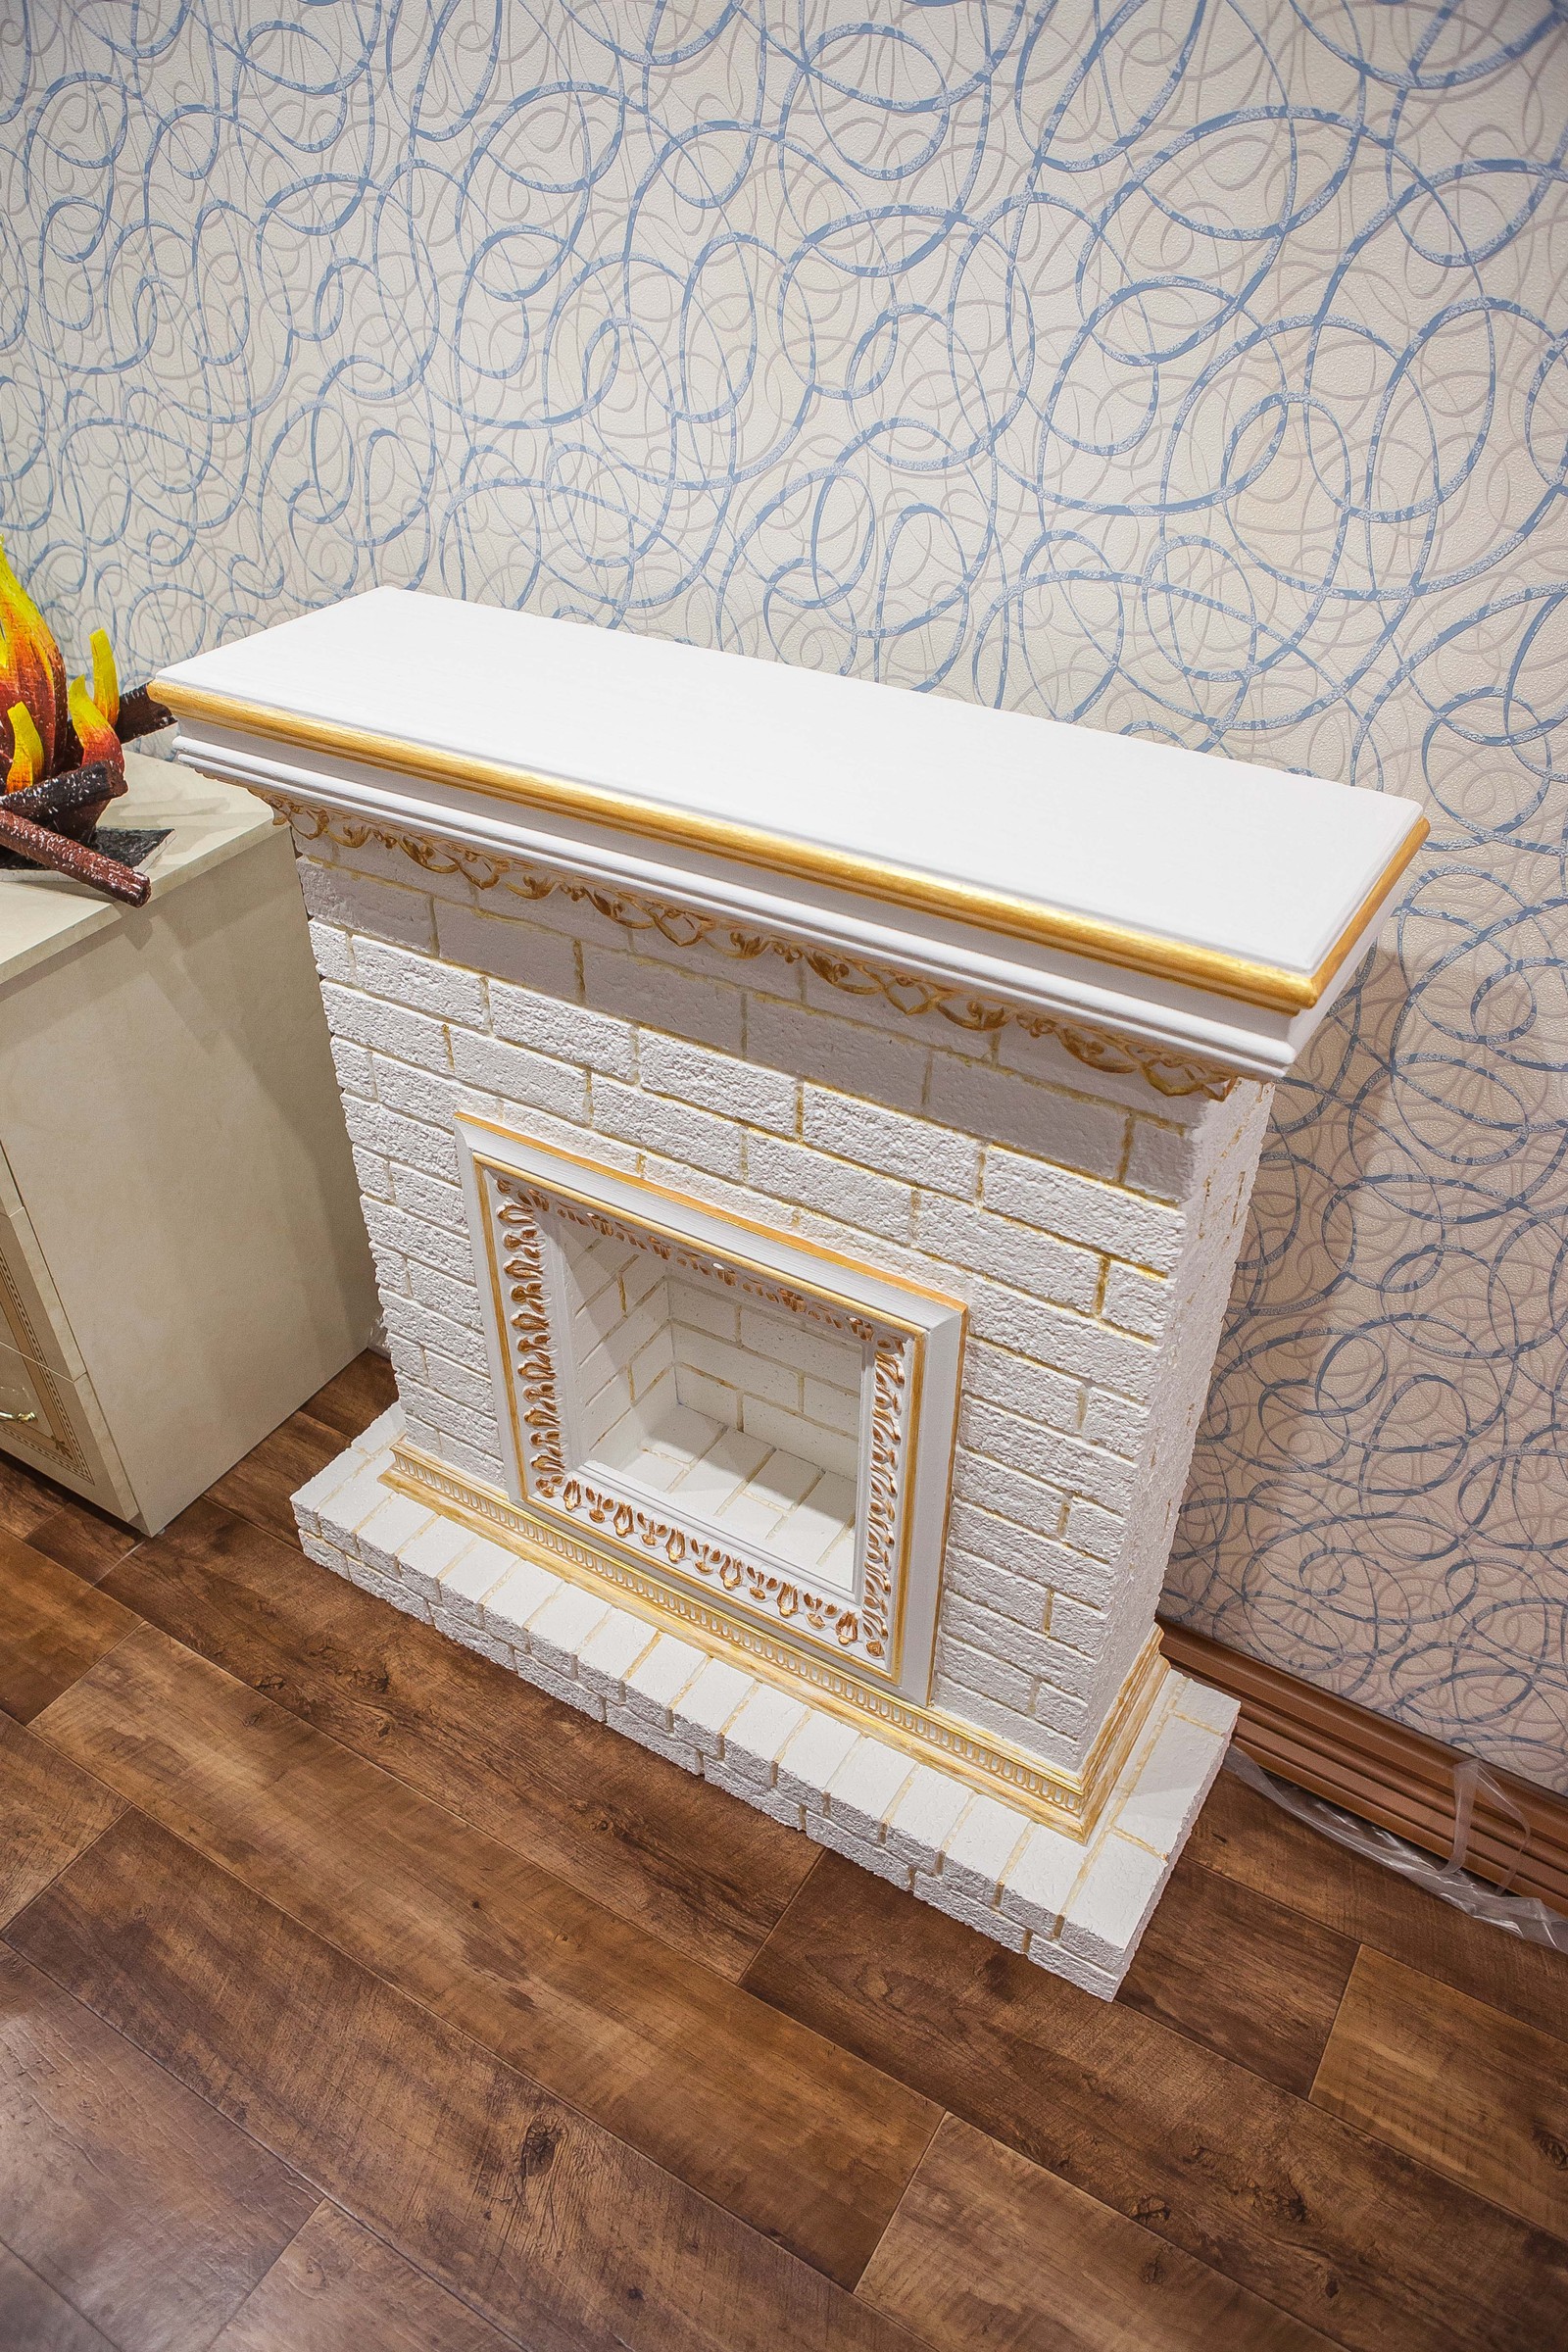 Polystyrene fireplace - My, Fireplace, With your own hands, Decorative fireplace, Longpost, My, Styrofoam, Photo studio, The photo